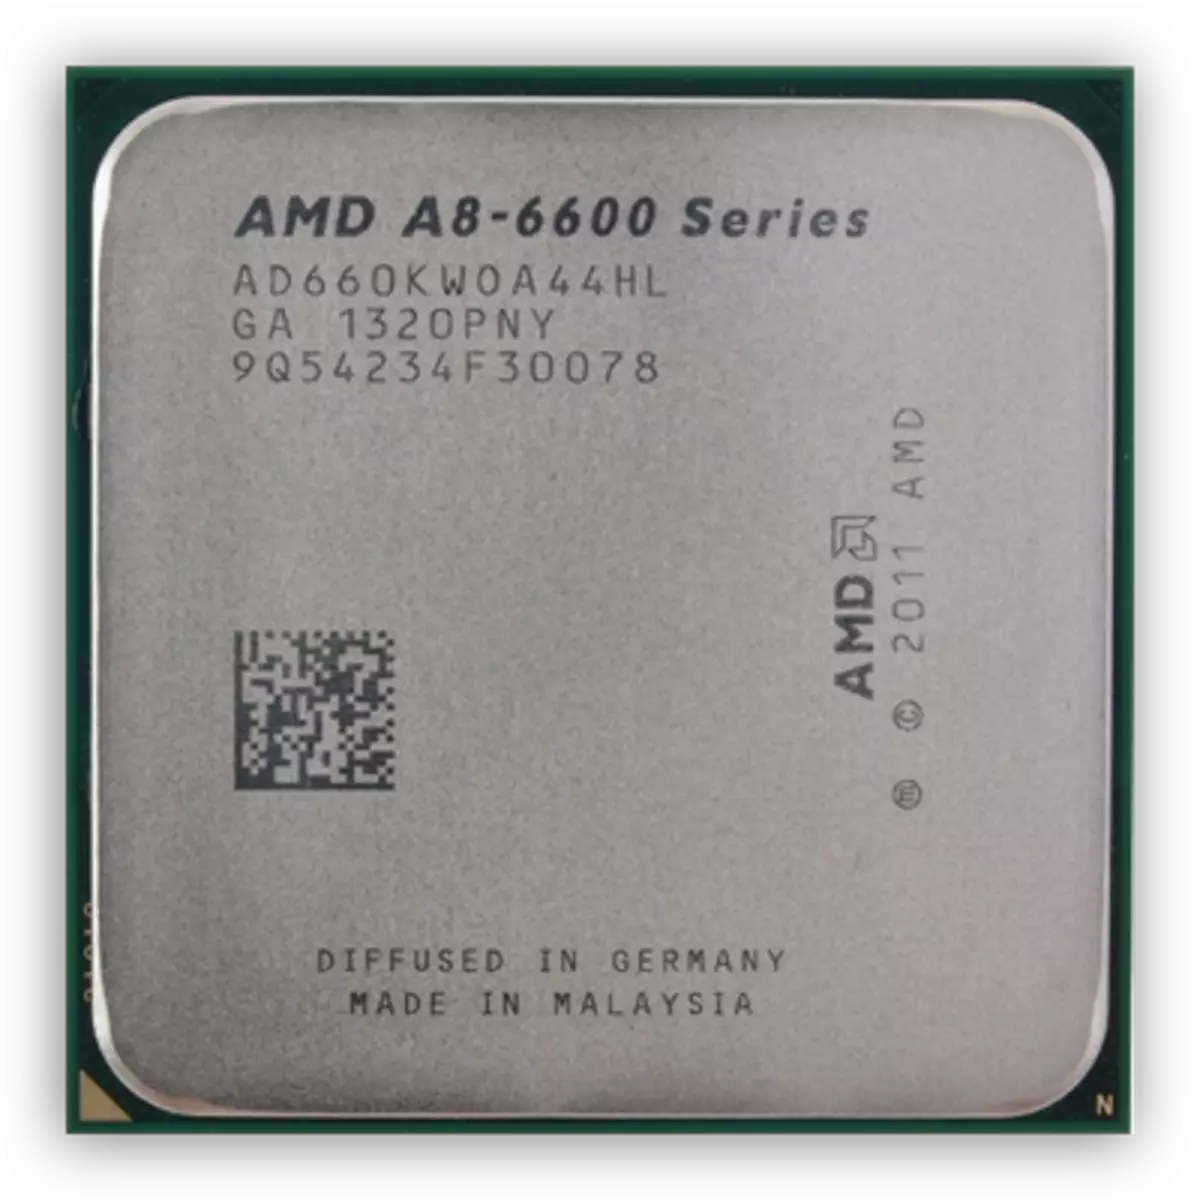 Prosesor AMD A8 6600K ing arsitektur Richland